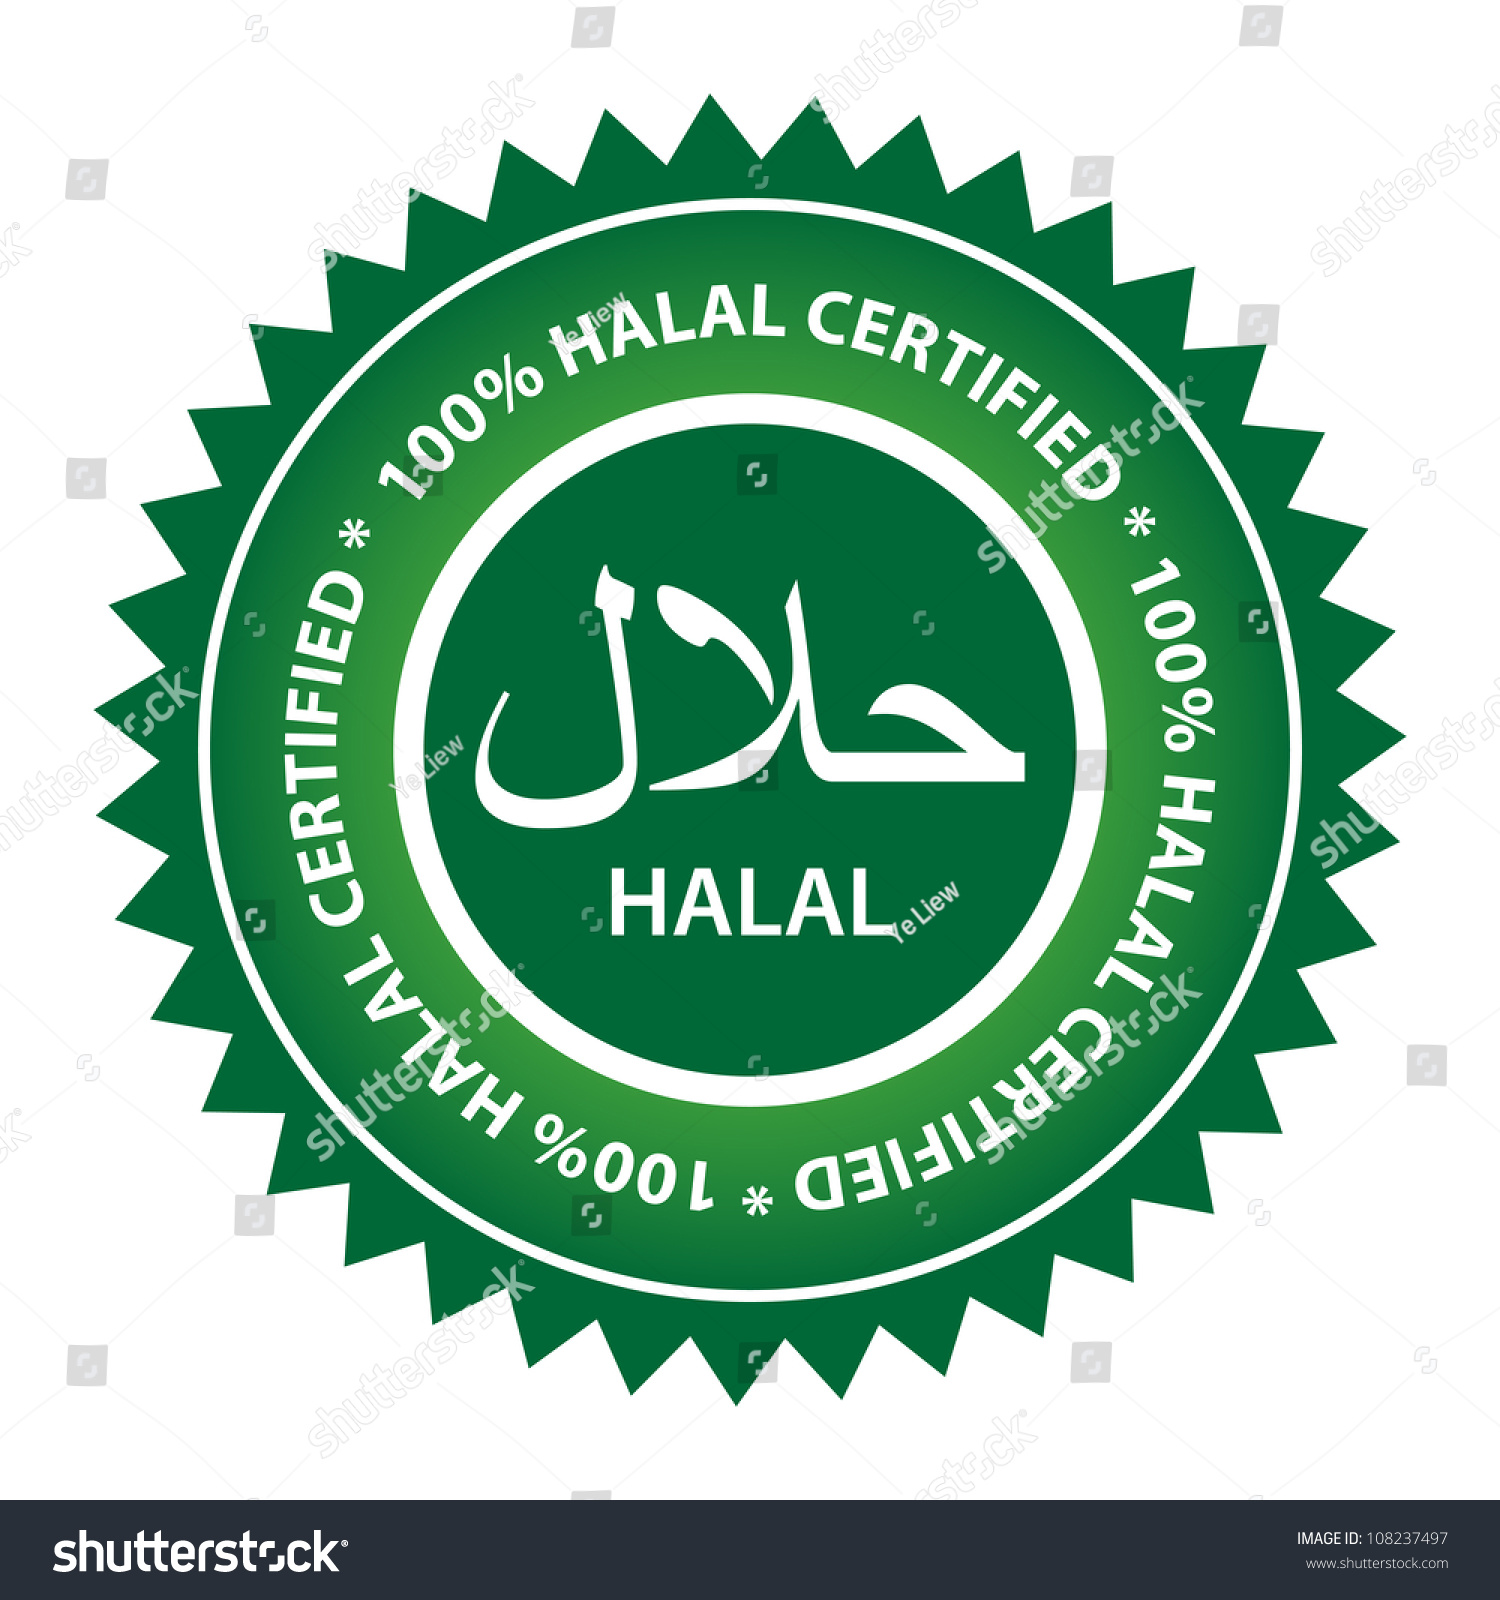 Binary options trading halal